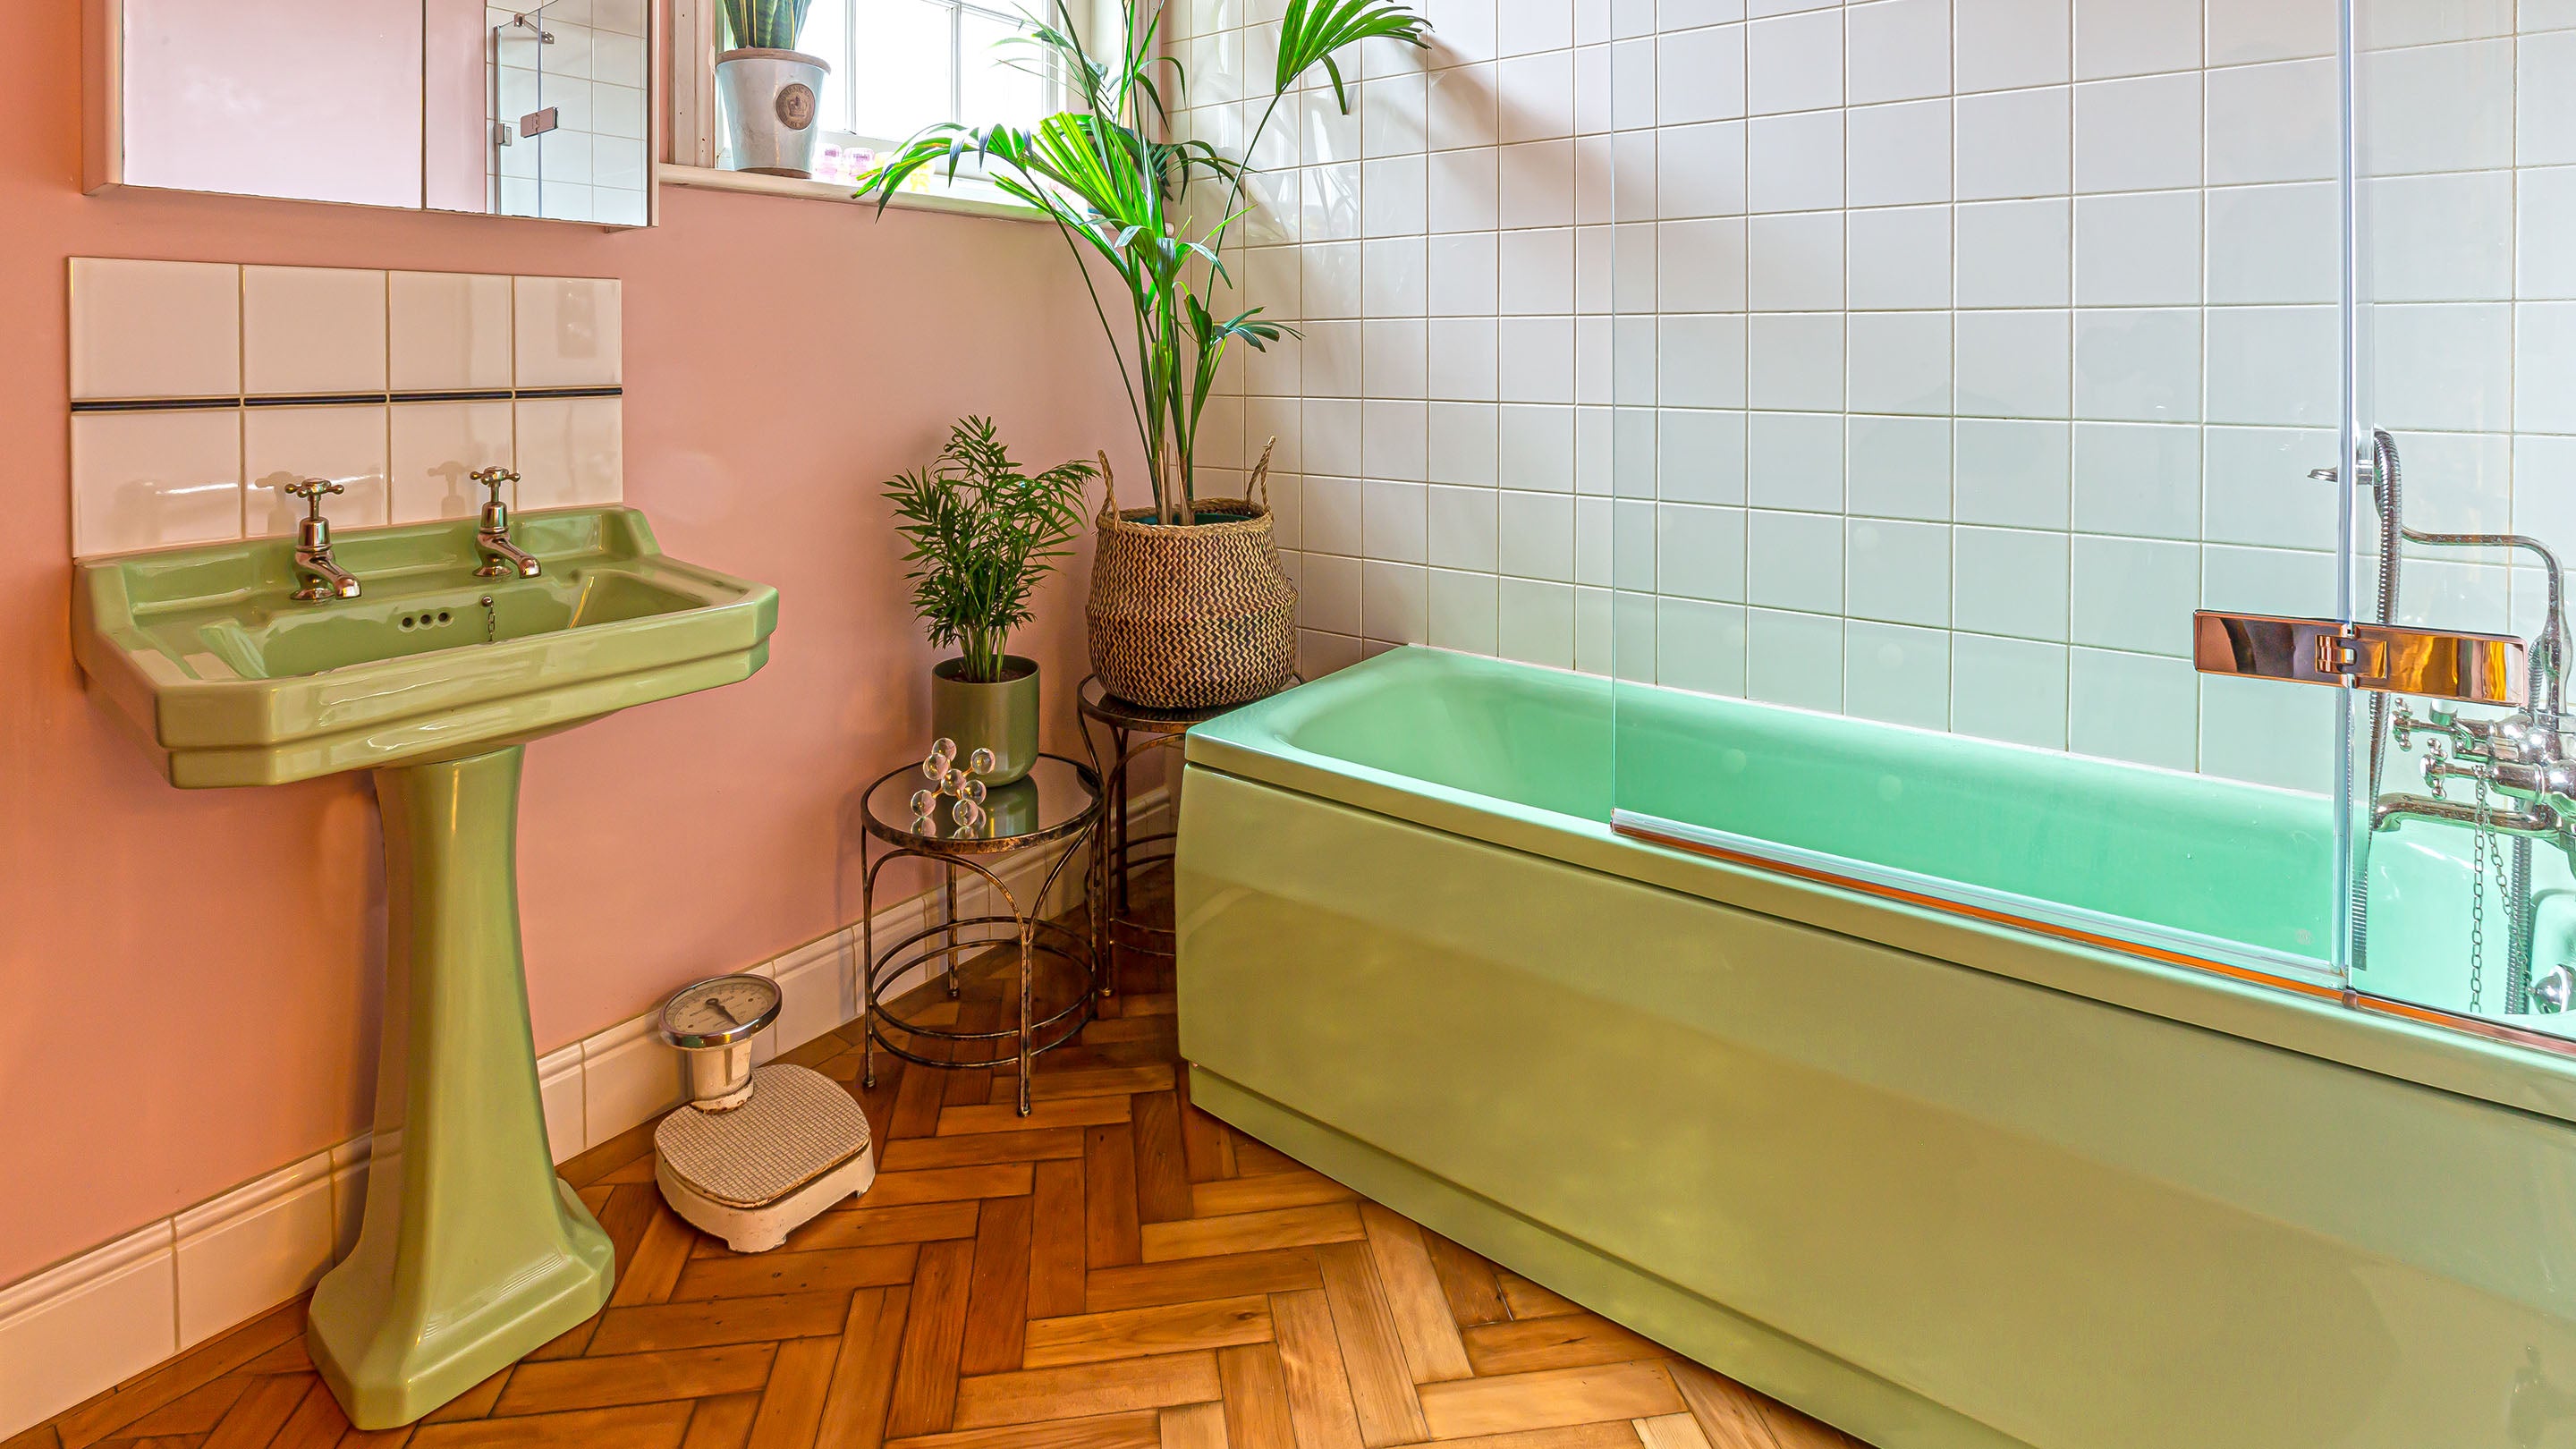 Deco Light Green sink basin, bath, Victorian home renovation, vintage, wood floor, The Bold Bathroom Company